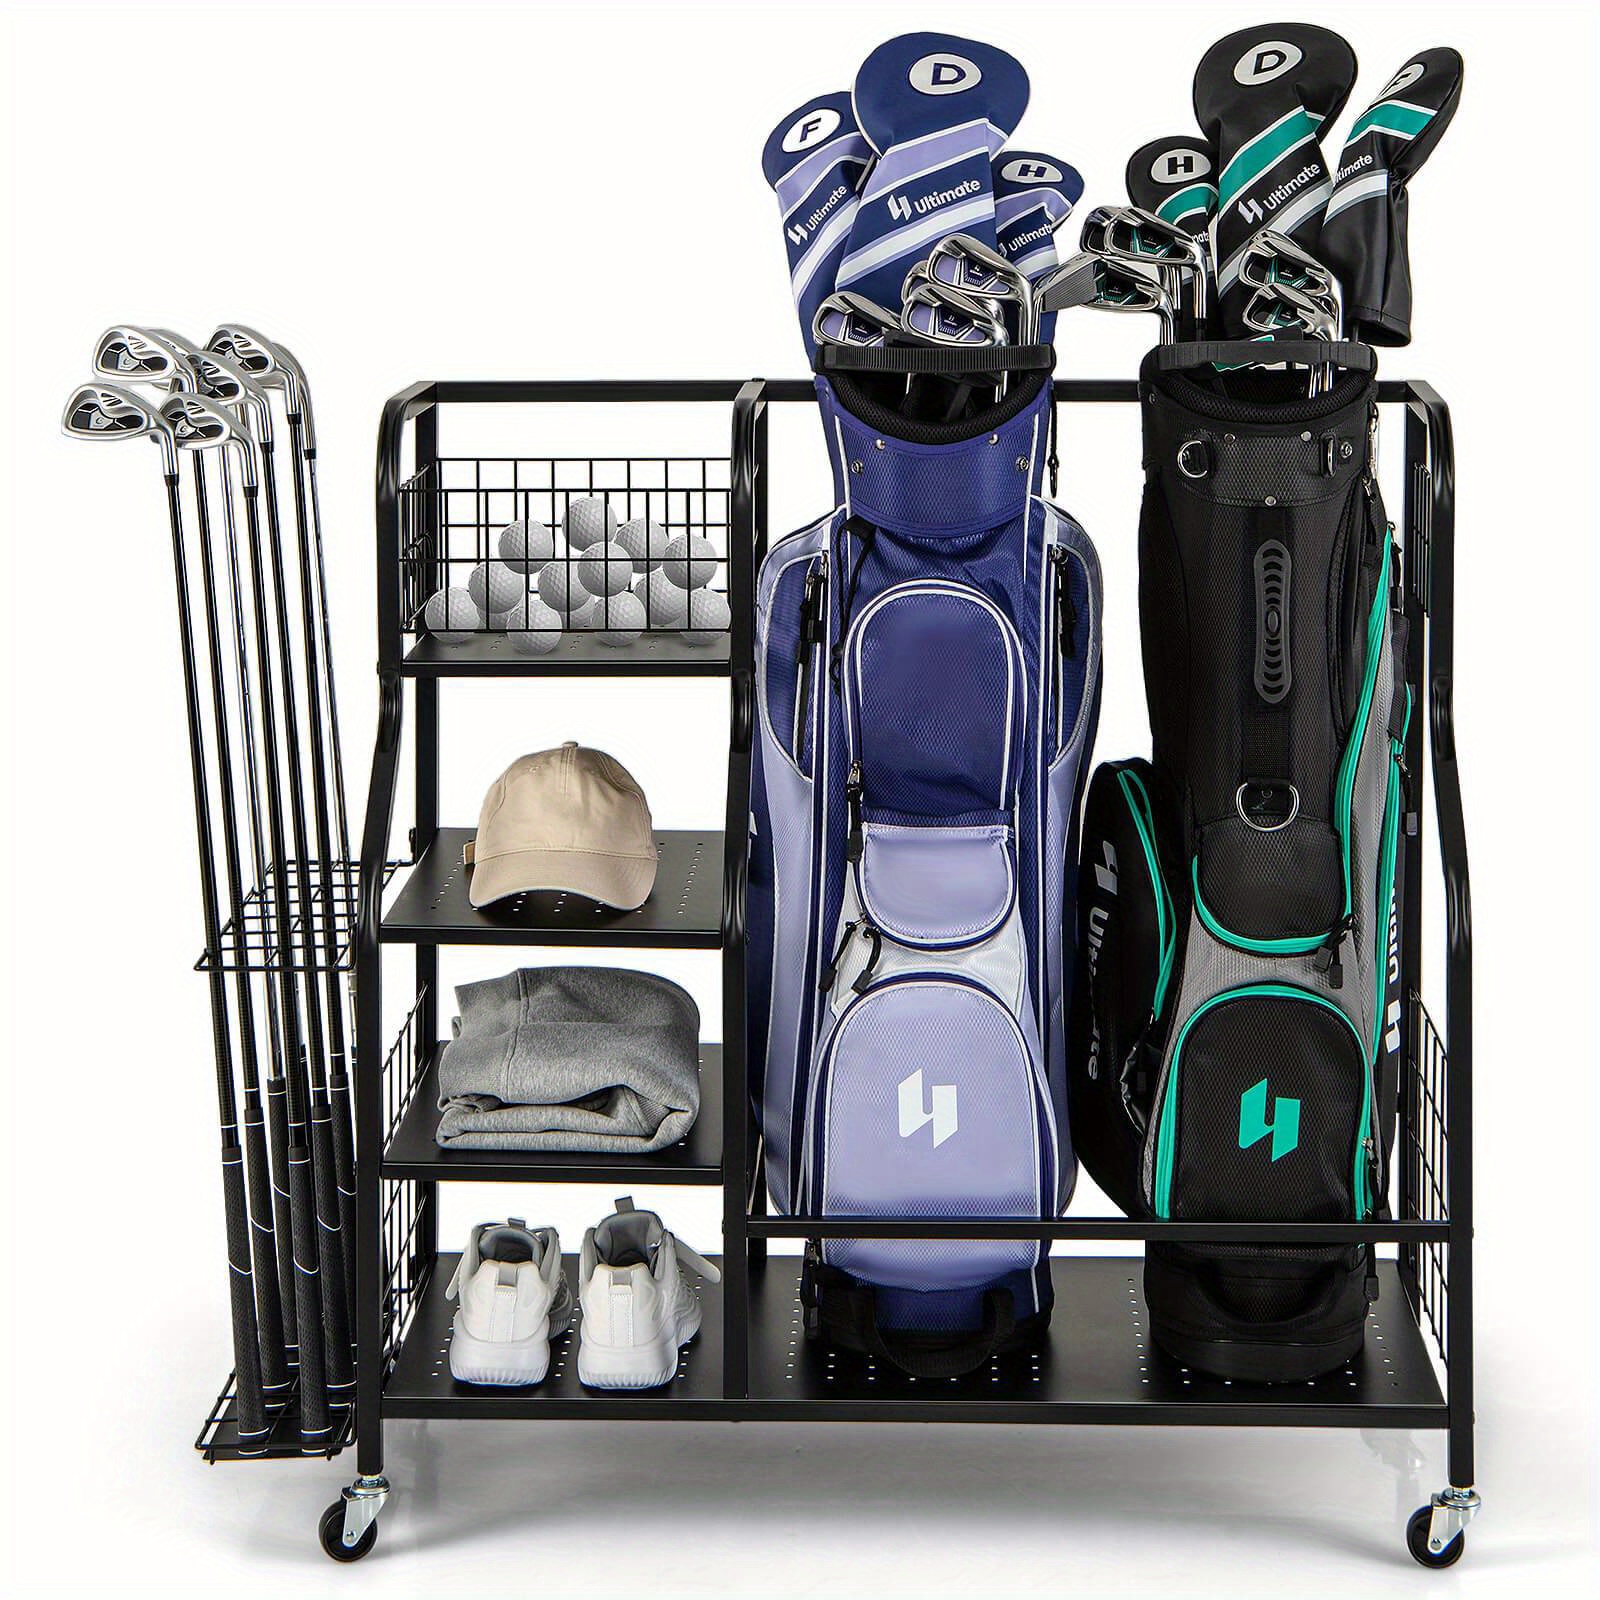 

Multigot Golf Bag Storage Garage Organizer W/ Wheels Extra Storage Rack For Golf Clubs